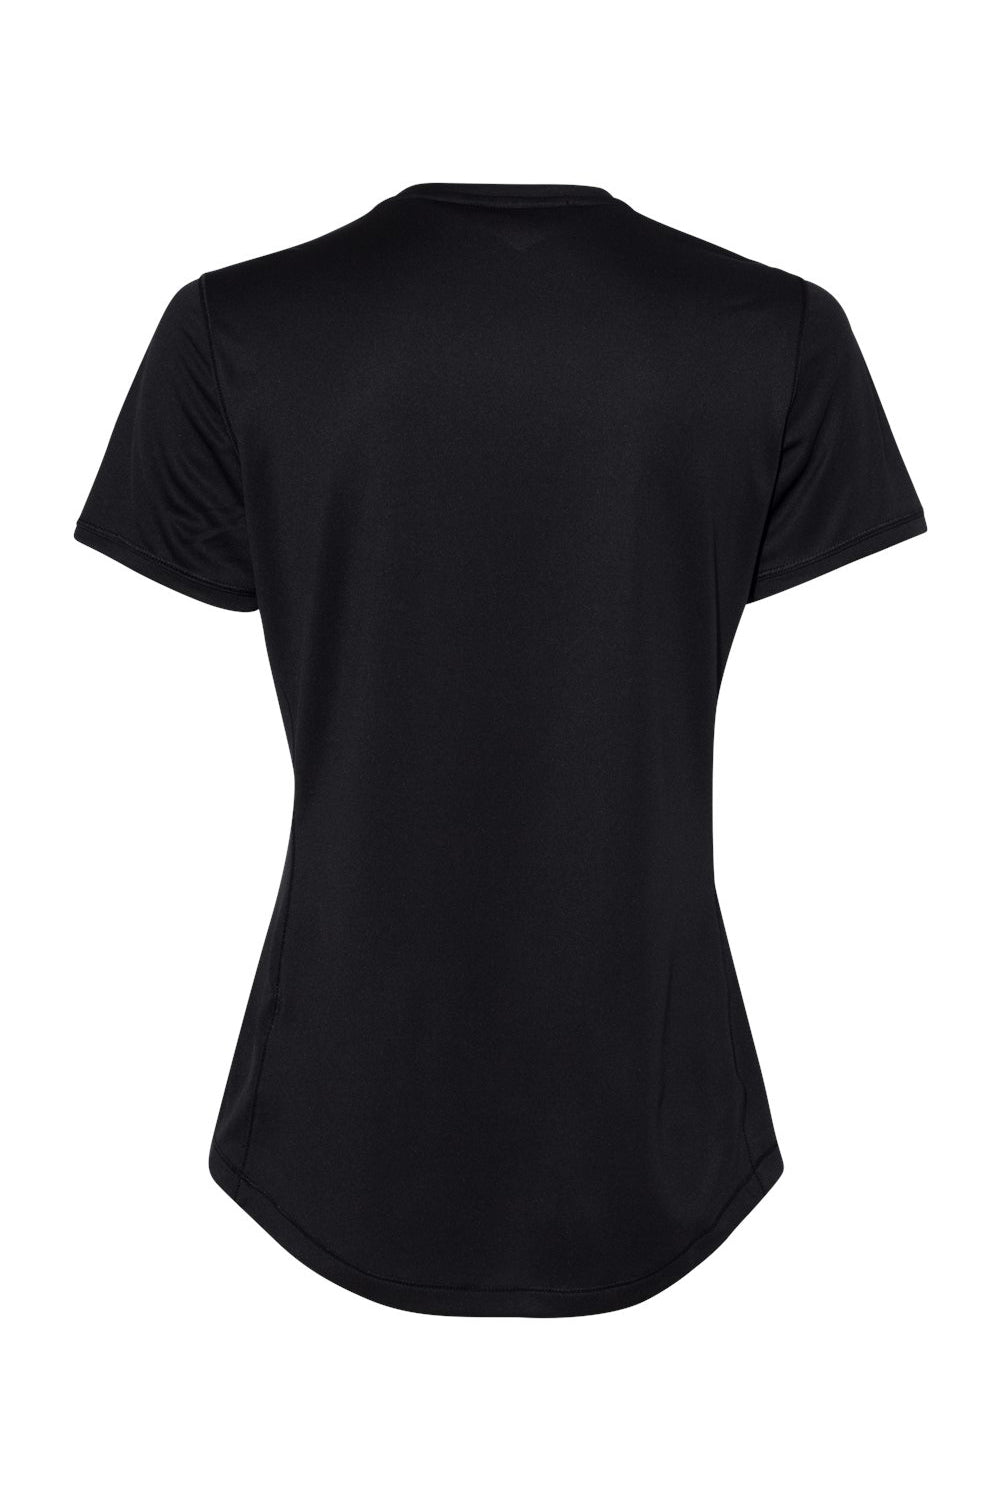 Adidas A377 Womens Short Sleeve Crewneck T-Shirt Black Flat Back